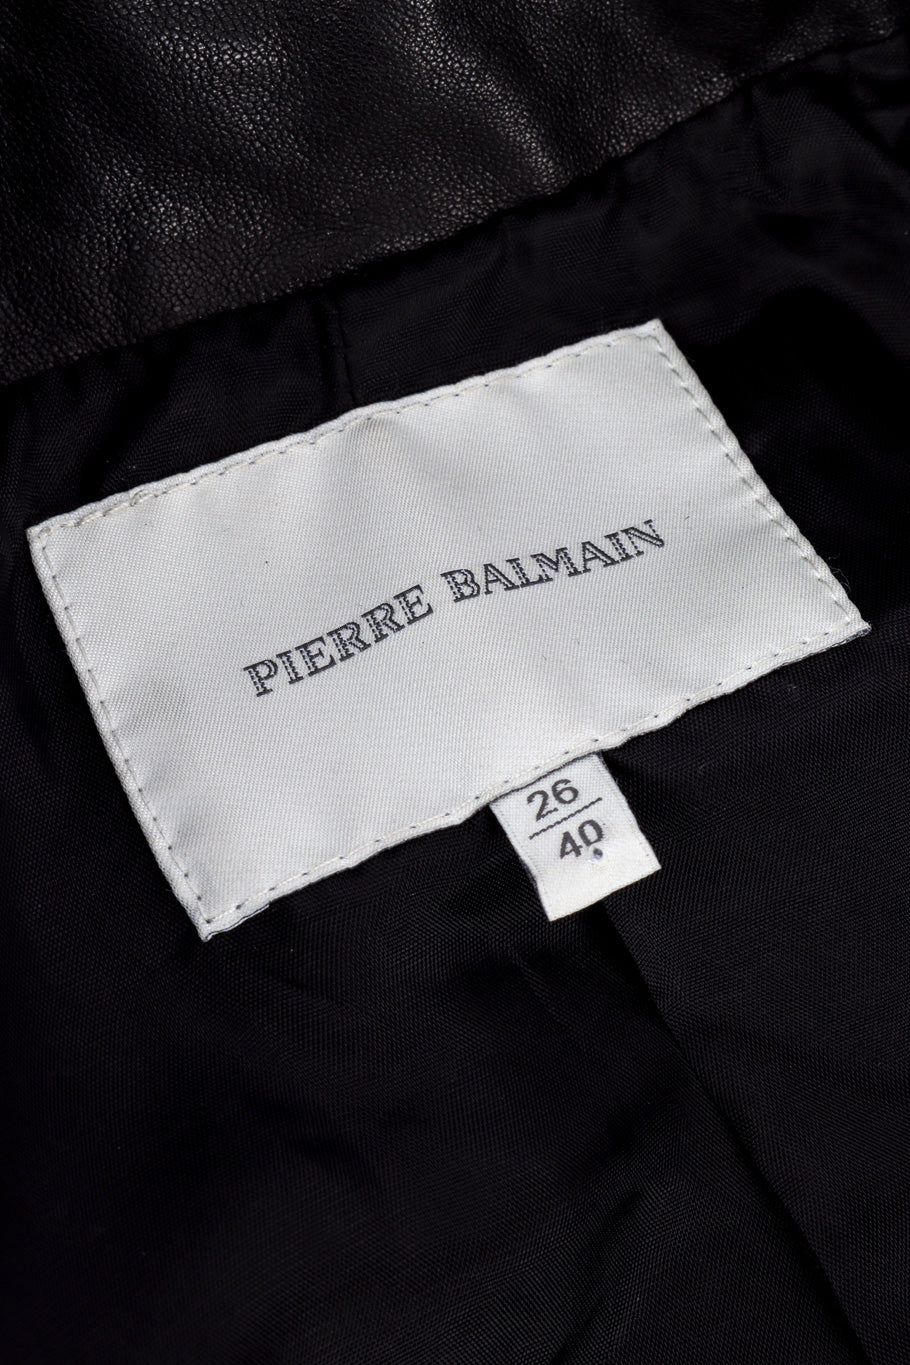 Pierre Balmain Ribbed Leather Moto Jacket signature label closeup @Recessla